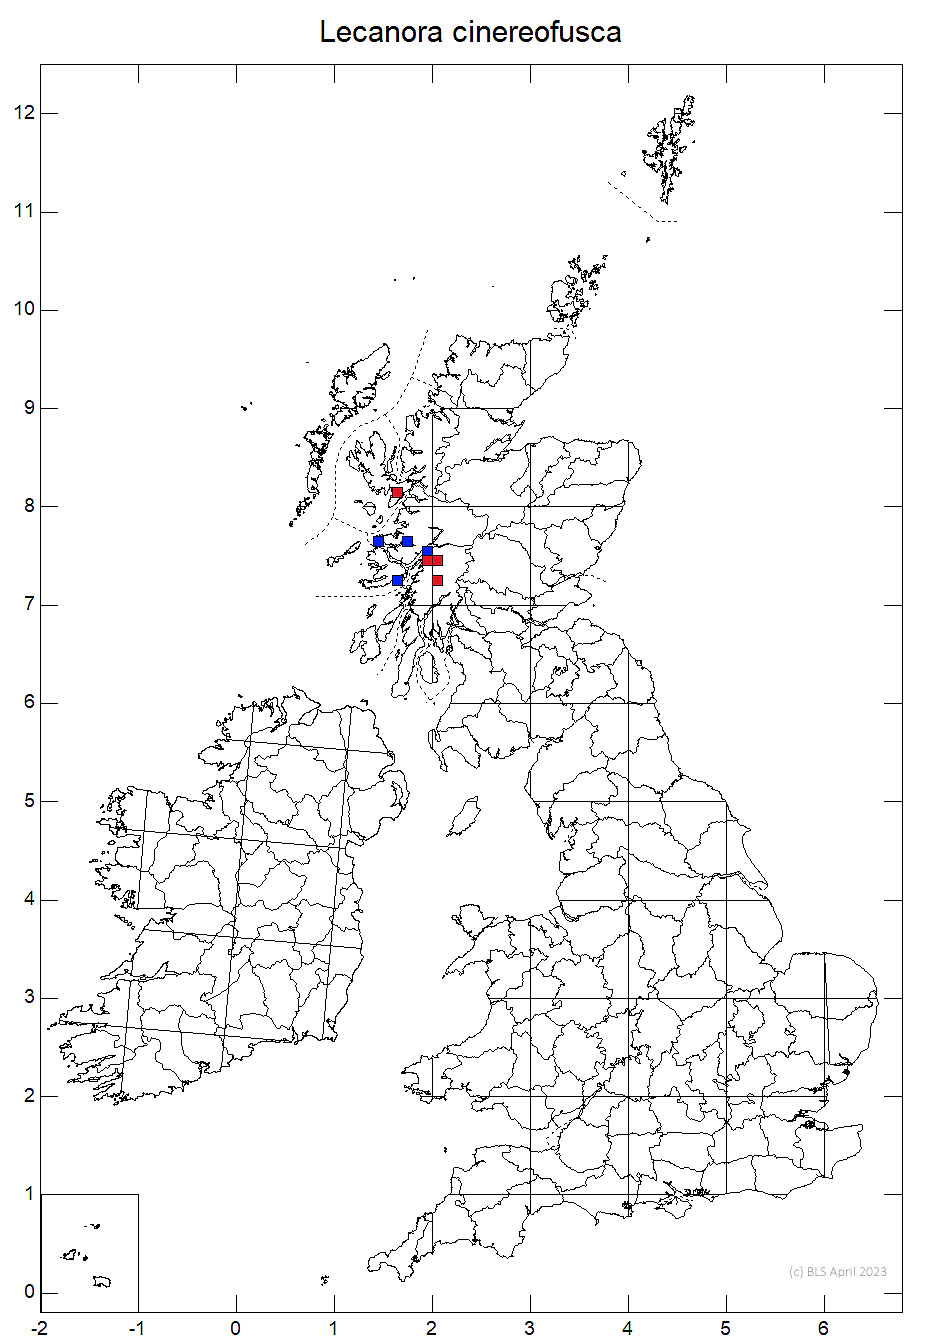 Lecanora cinereofusca 10km sq distribution map